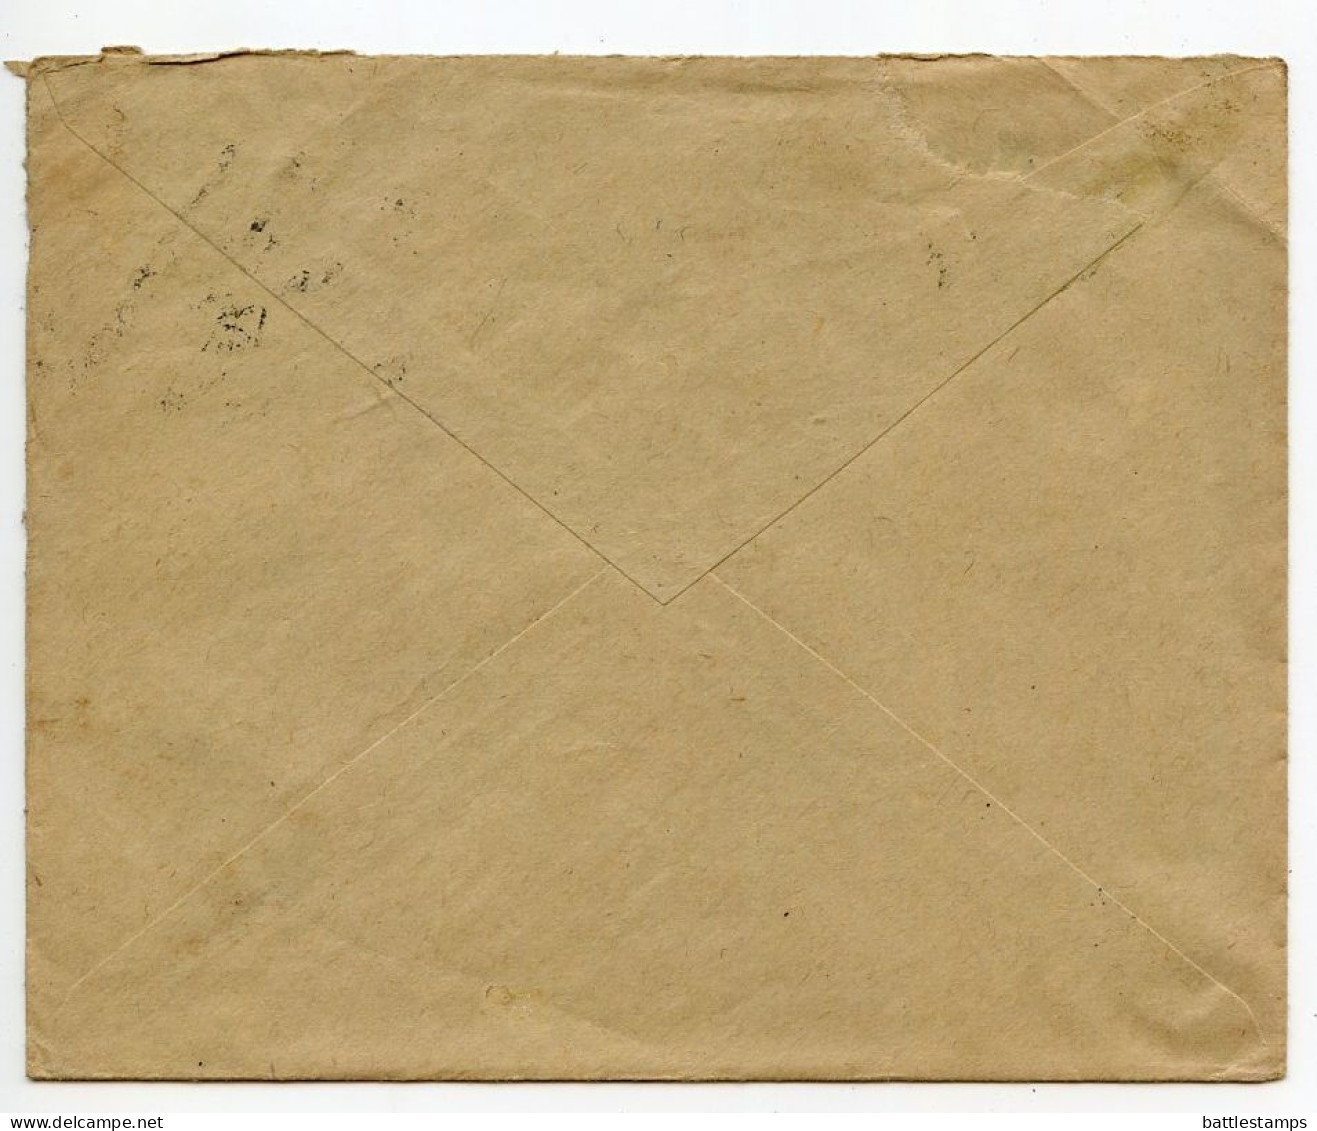 Germany 1929 Cover W/ Letter & Zahlkarte; Pockau (Flöhatal) - Kurt Neumann, Rauchwarenfärberei Und Blenderei; 15pf. Kant - Briefe U. Dokumente